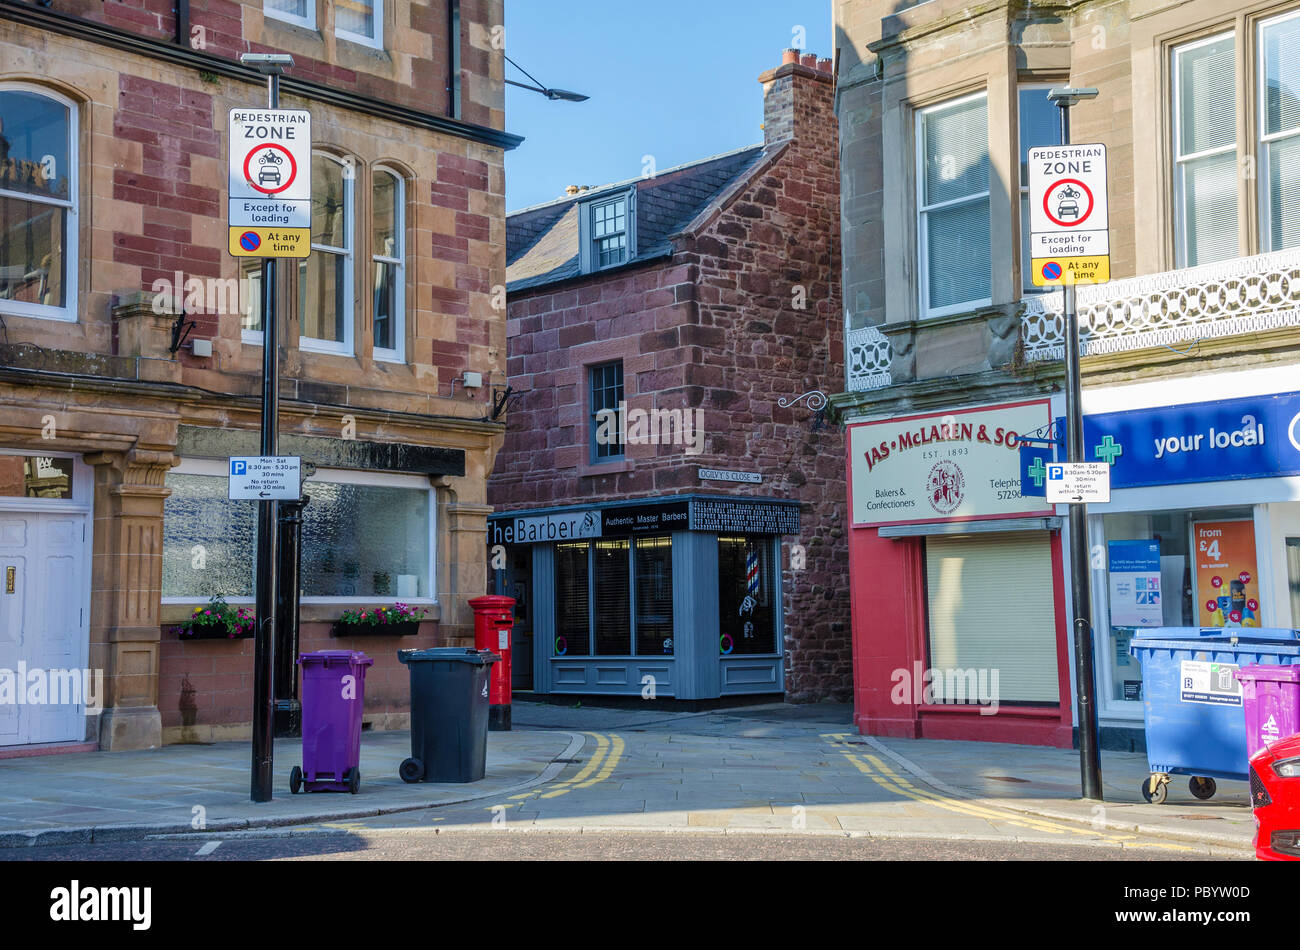 Signs giving notification of a Pedestrian Zone in Kirriemuir in Scotland, UK. Stock Photo